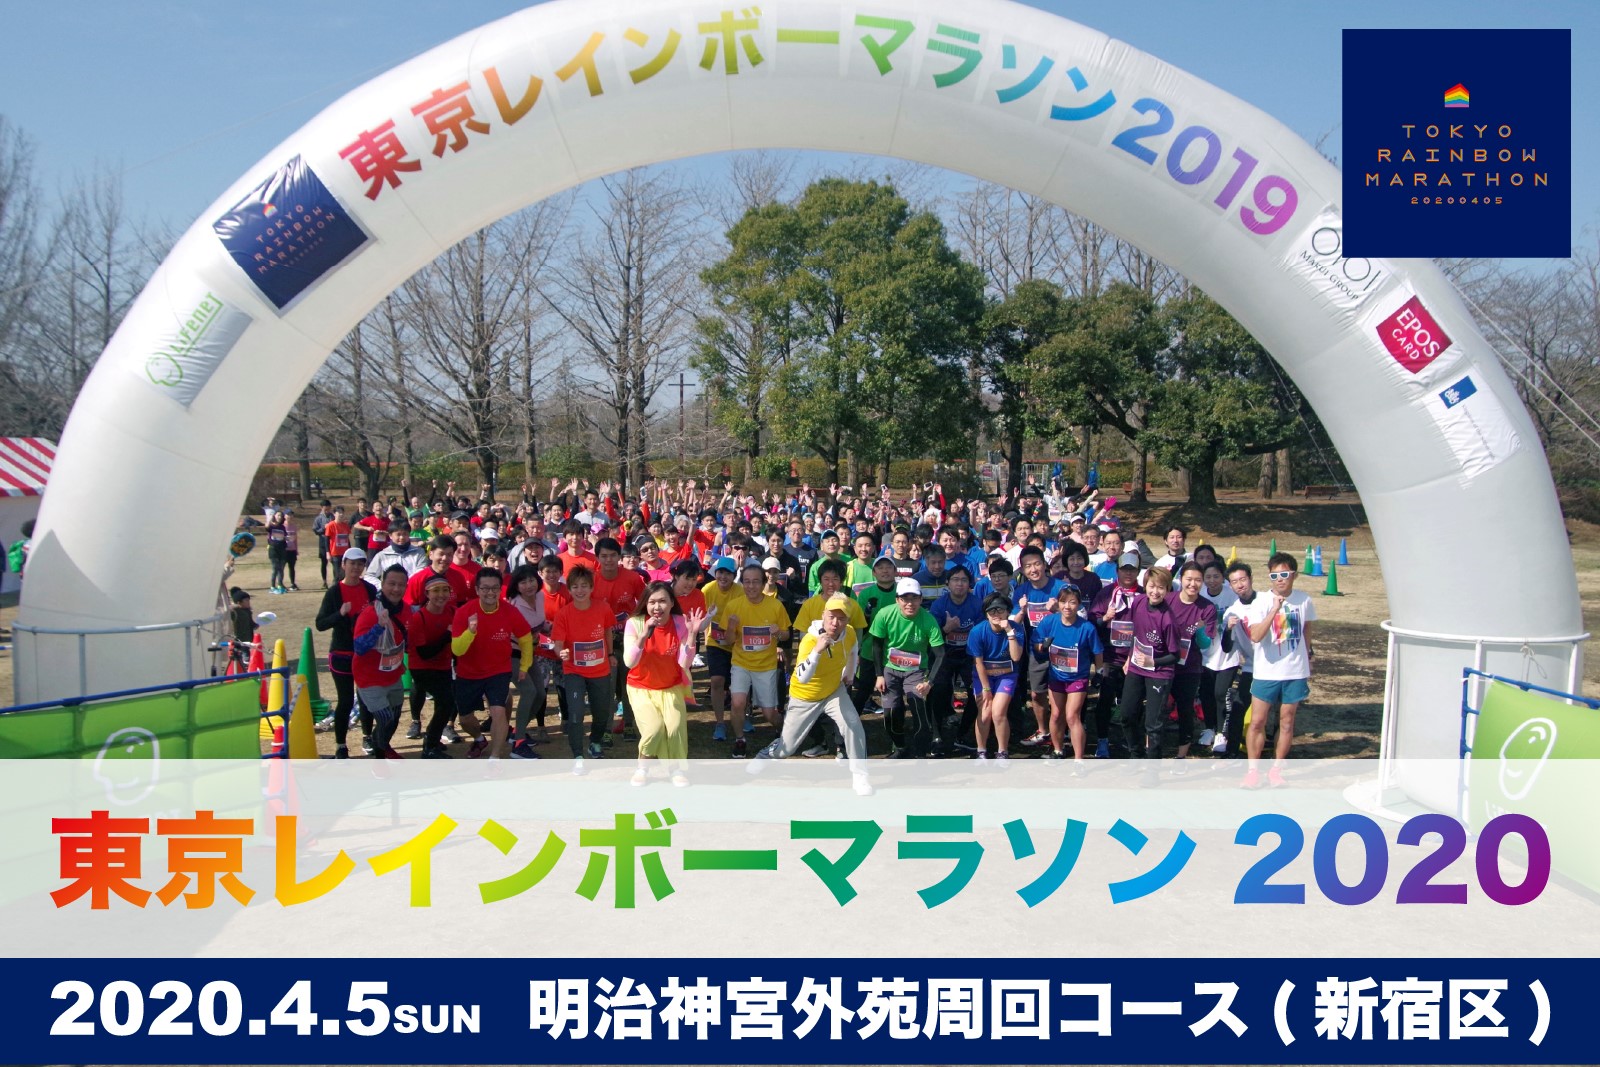 Tokyo Rainbow Marathon 2020 Sunday April 5, 2020